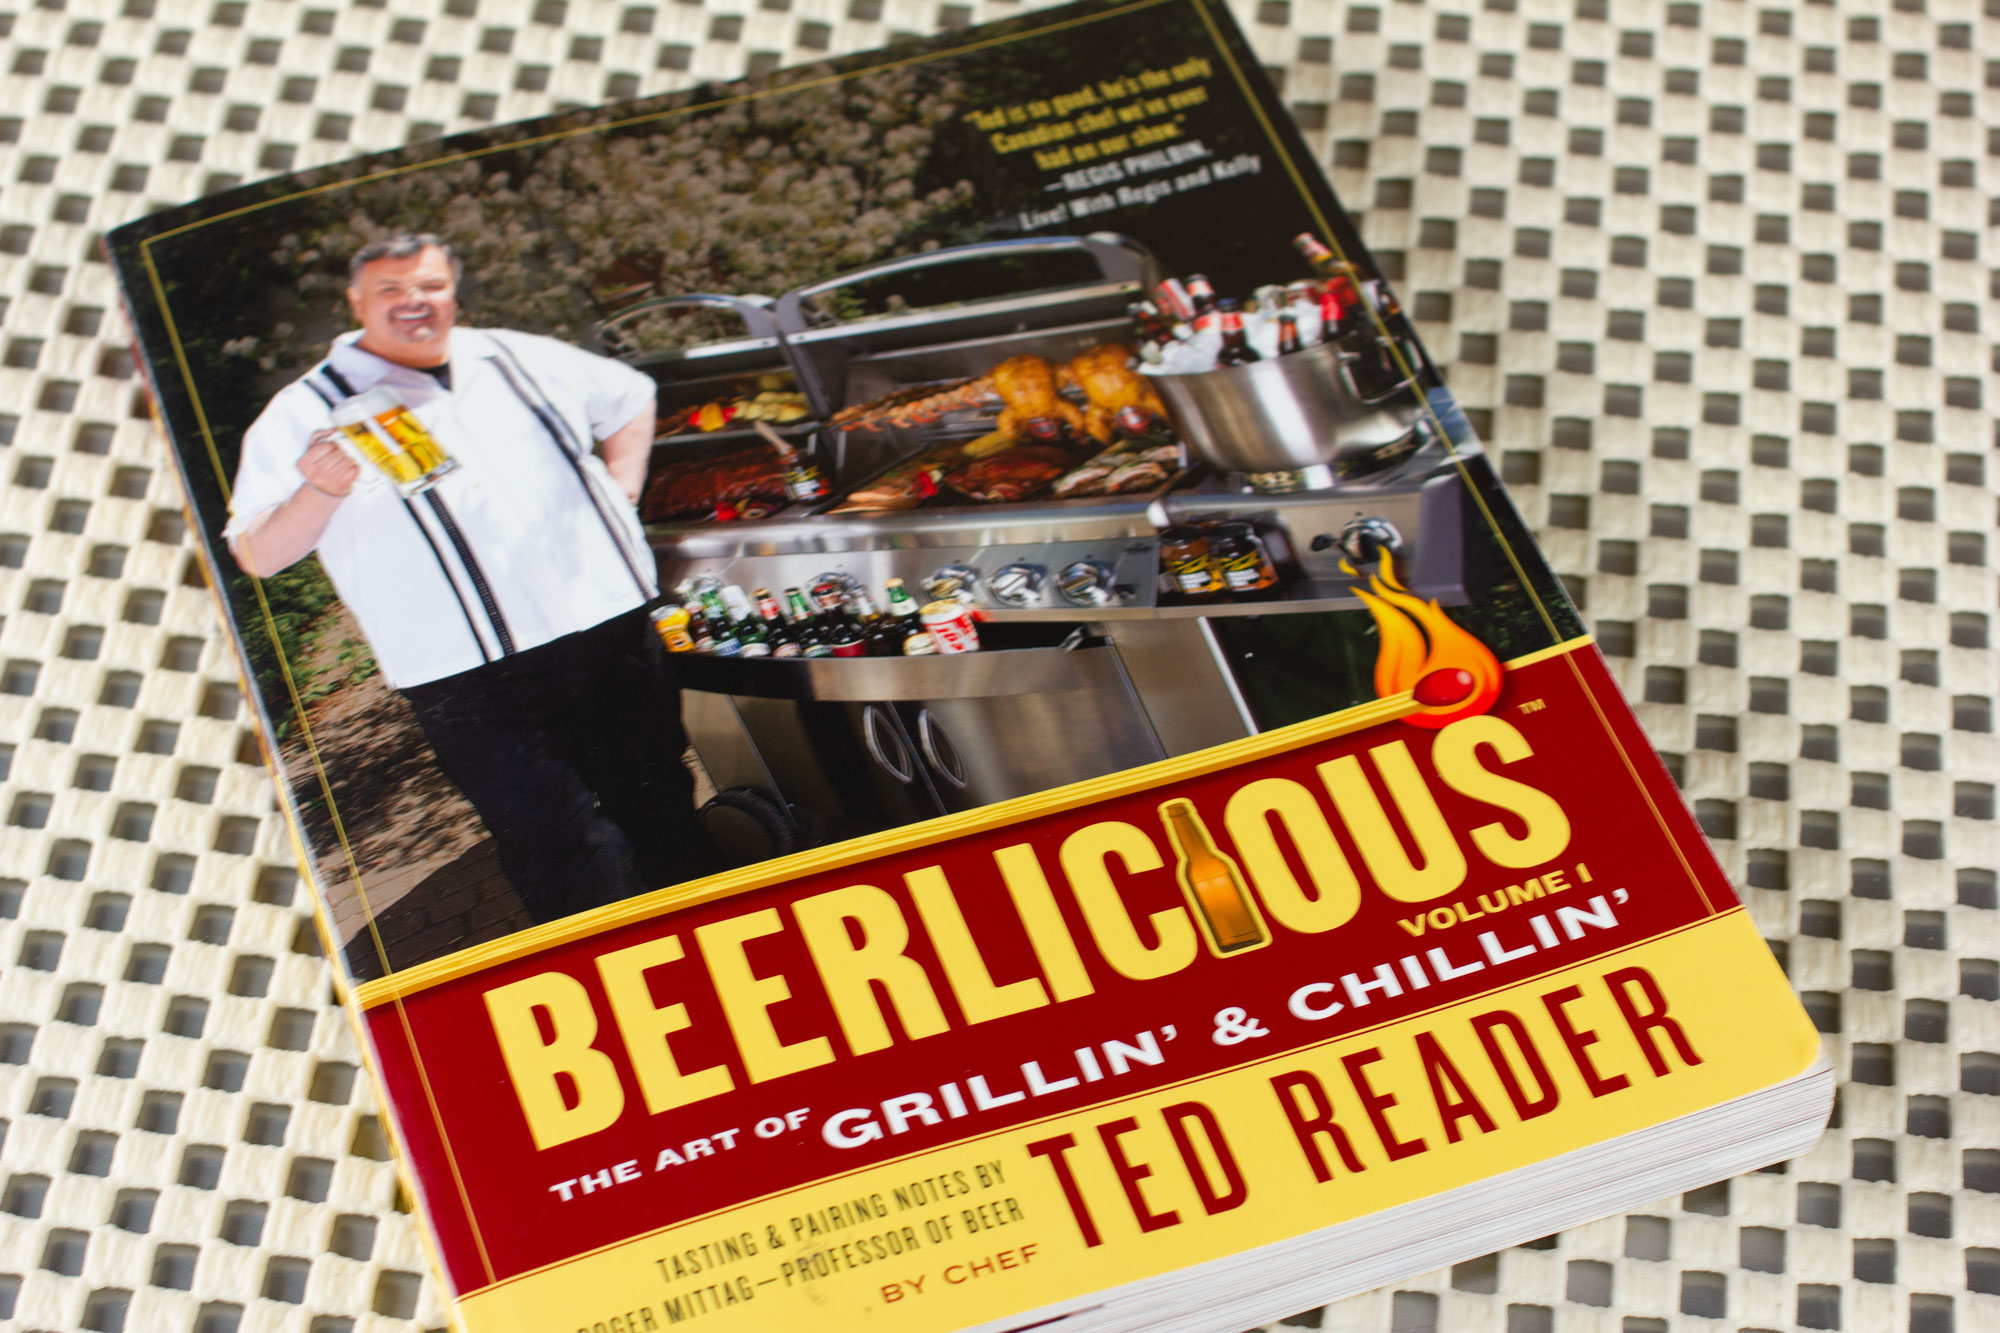 Beerlicious book